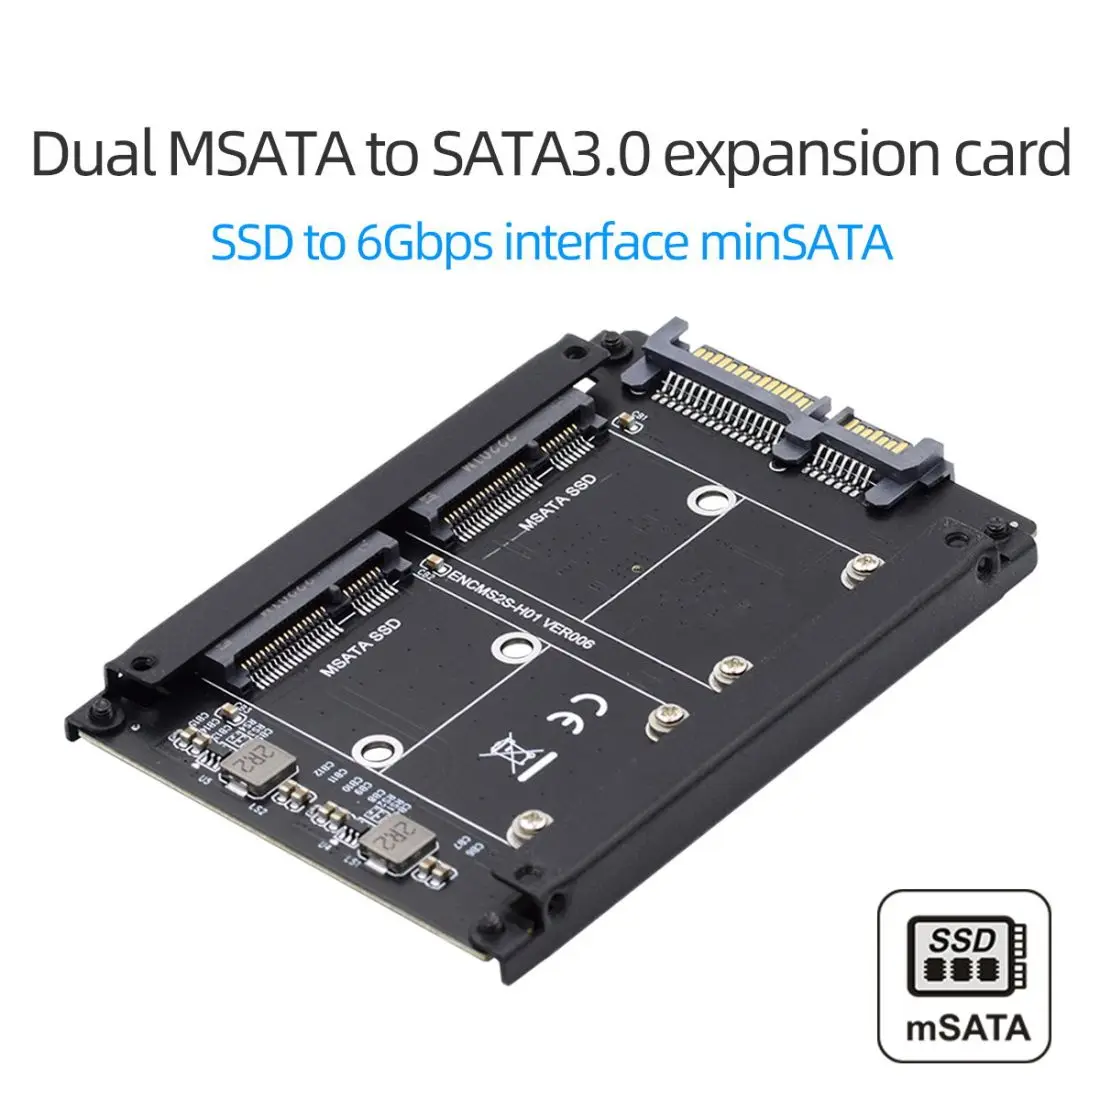 

Xiwai MSATA to SATA 3.0 Adapter,Dual MSATA Mini-SATA SSD Card JBOD Raid0 Span Bridge 2.5inch SATA Combo HDD Disk Drive Enclosure